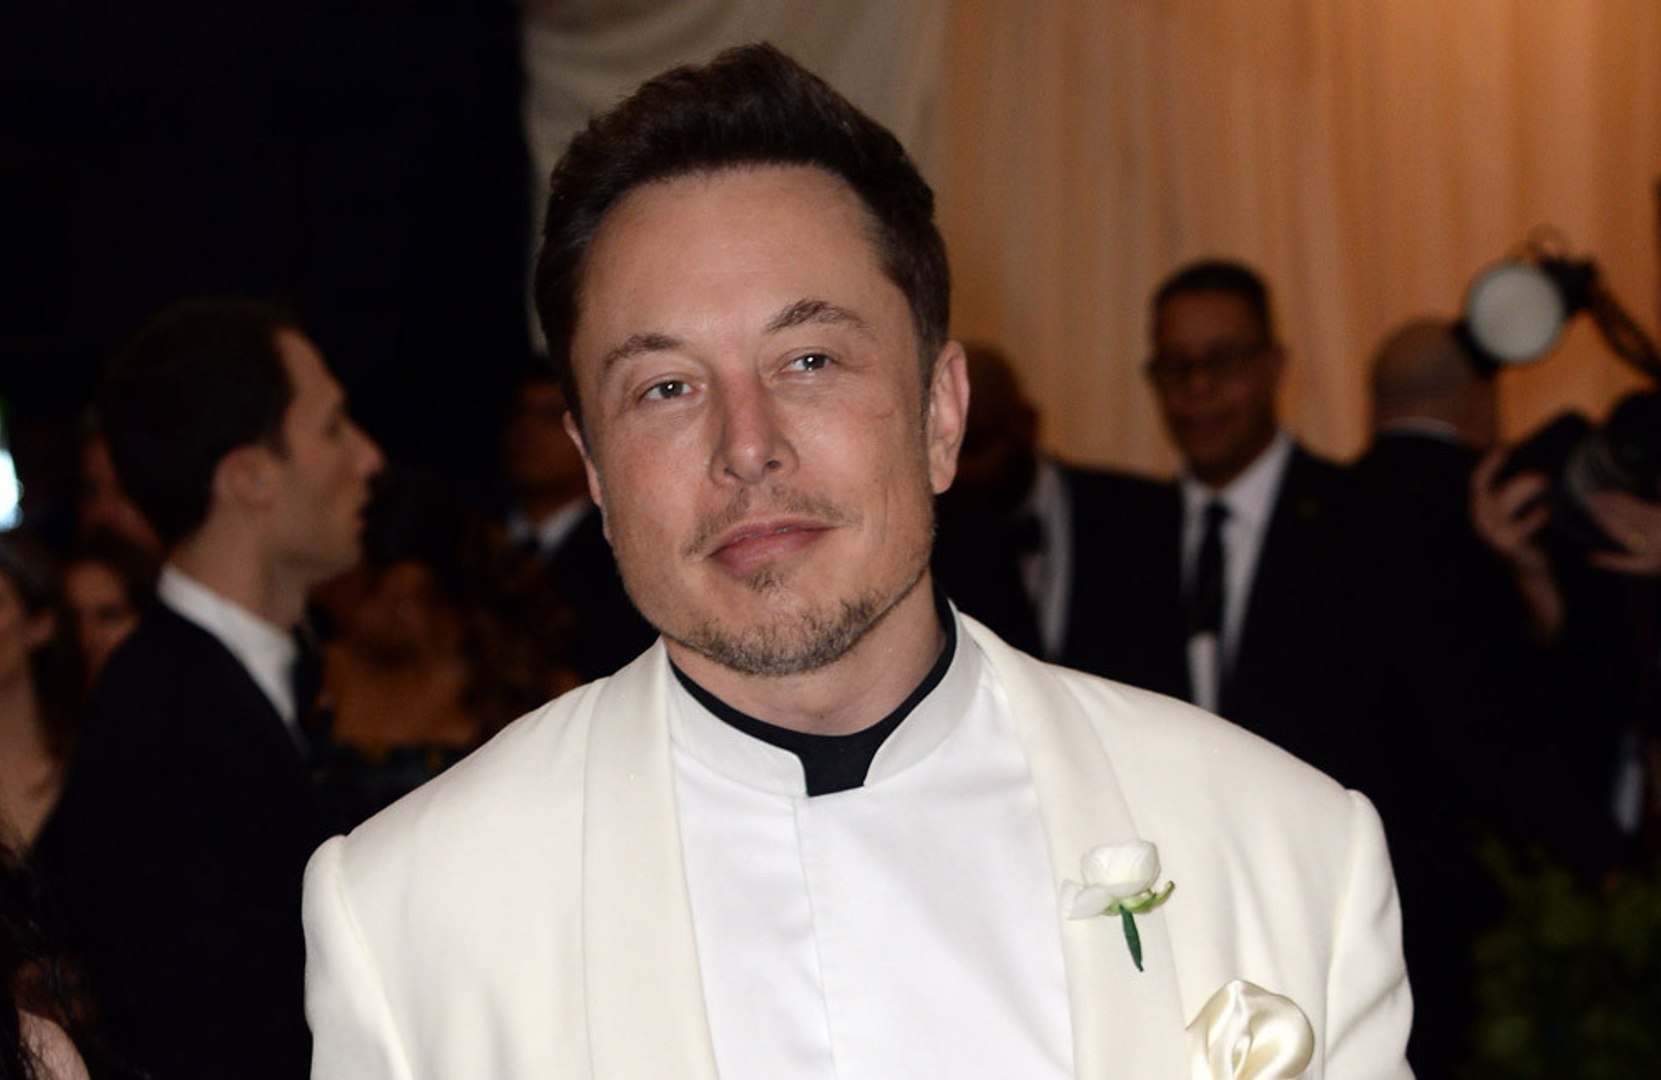 Elon Musk has Asperger's syndrome